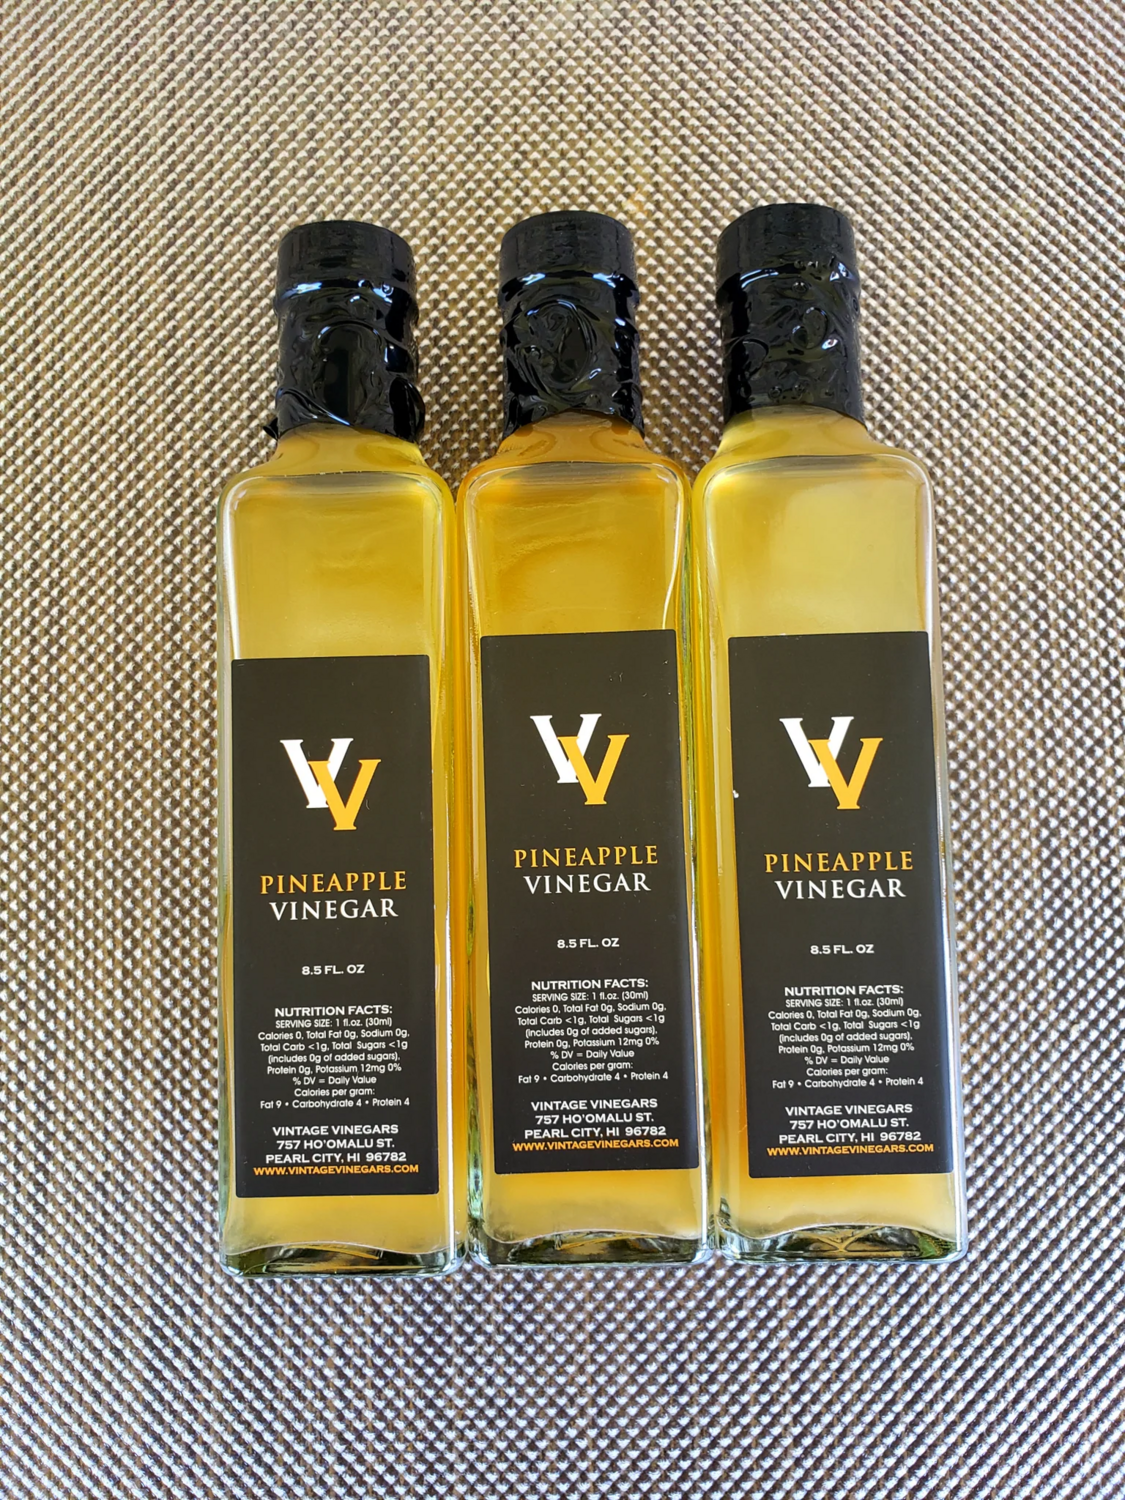 Vintage Vinegars, Original Pineapple Vinegar (8.5 Oz.)